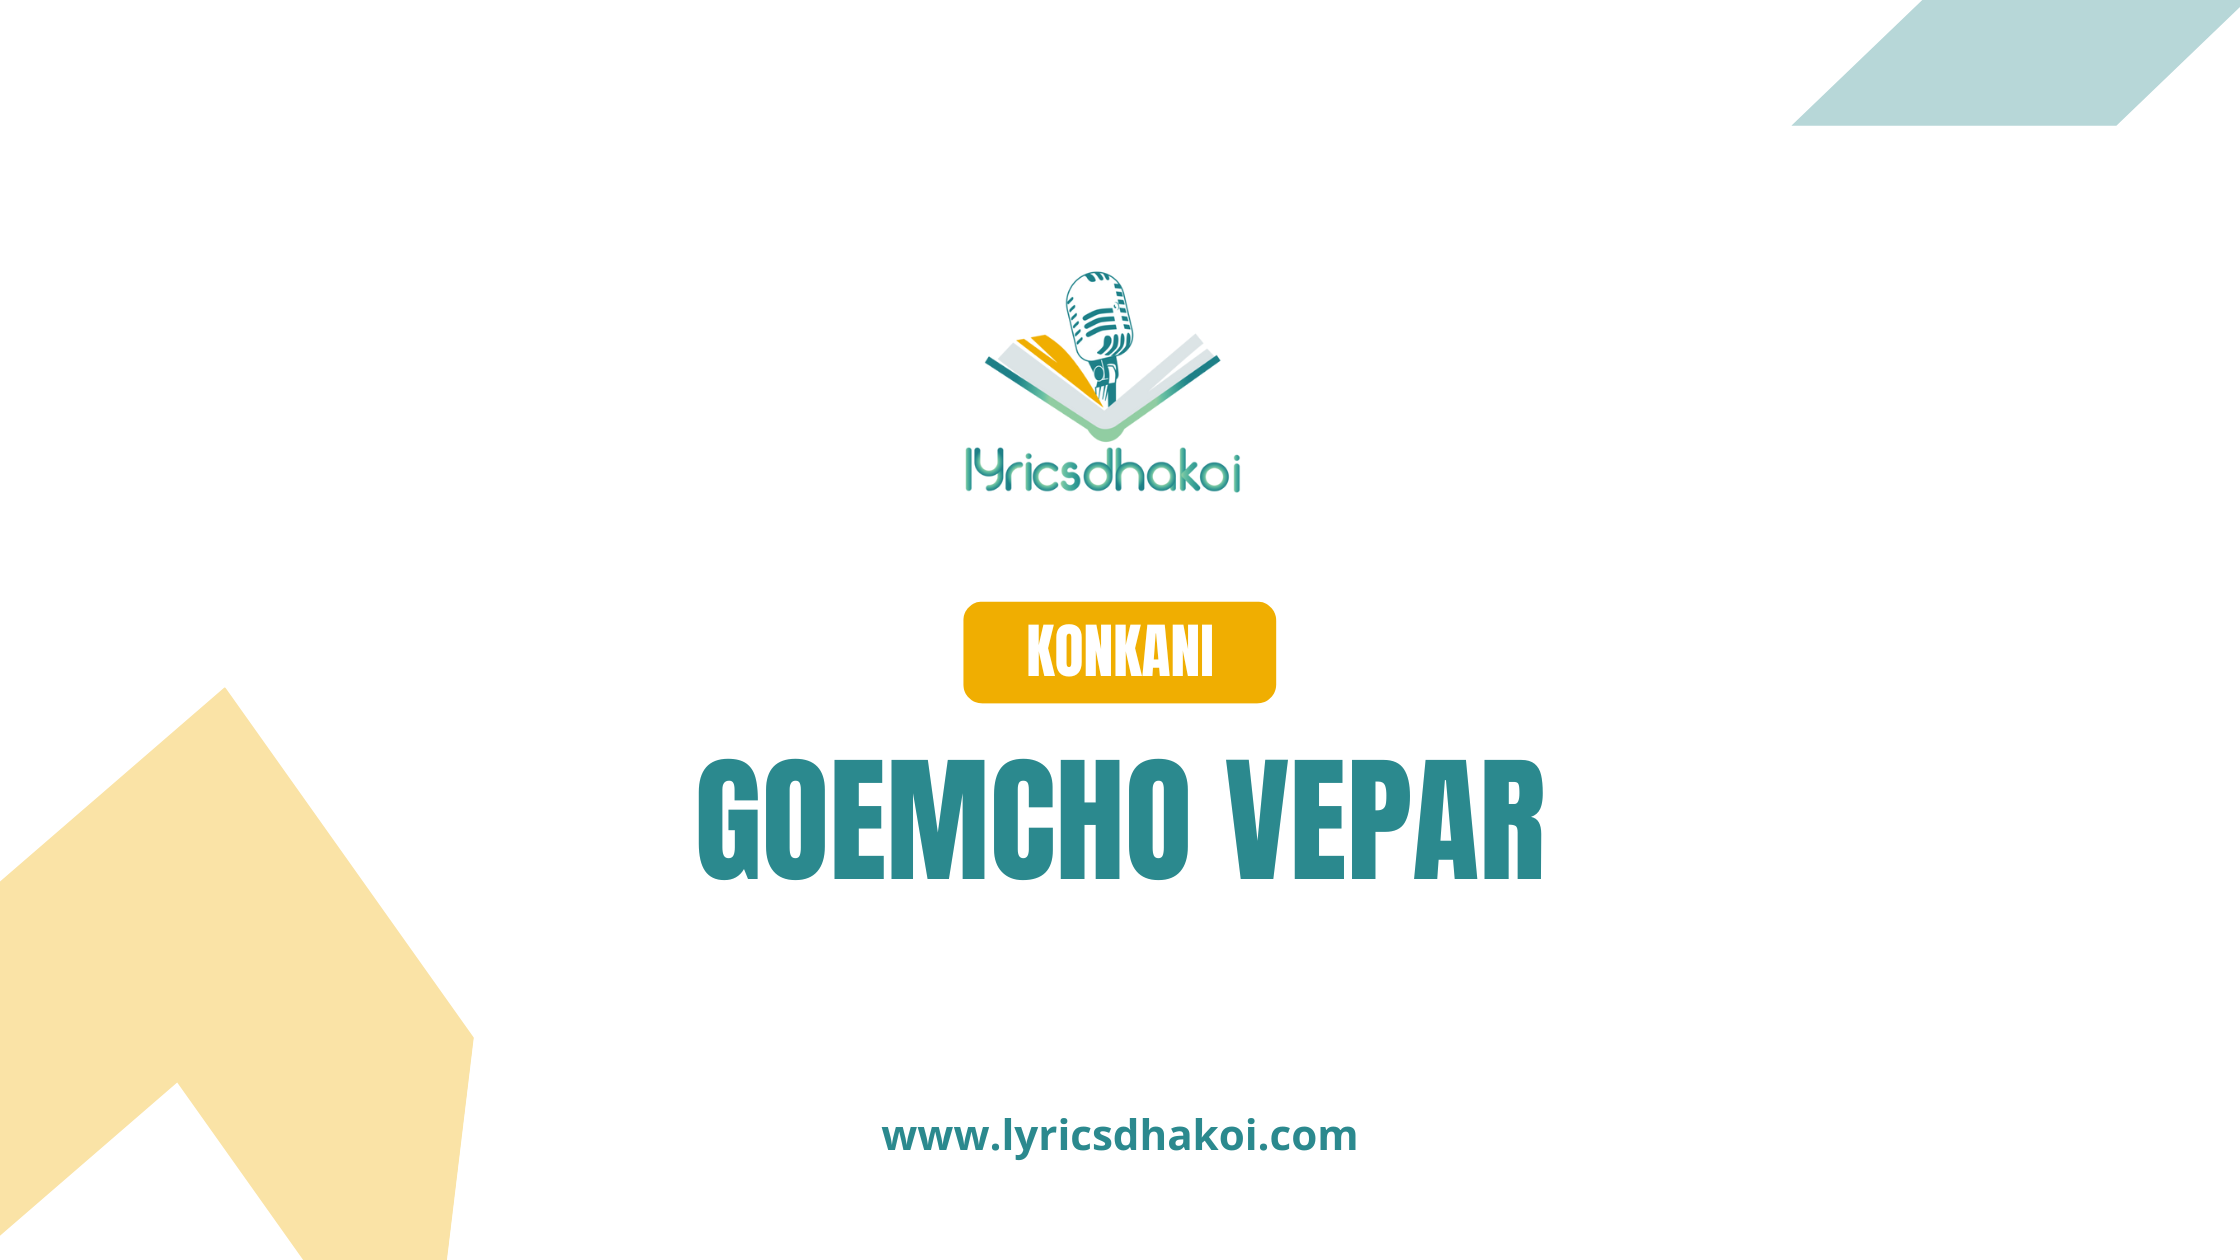 Goemcho Vepar Konkani Lyrics for Karaoke Online - LyricsDhakoi.com